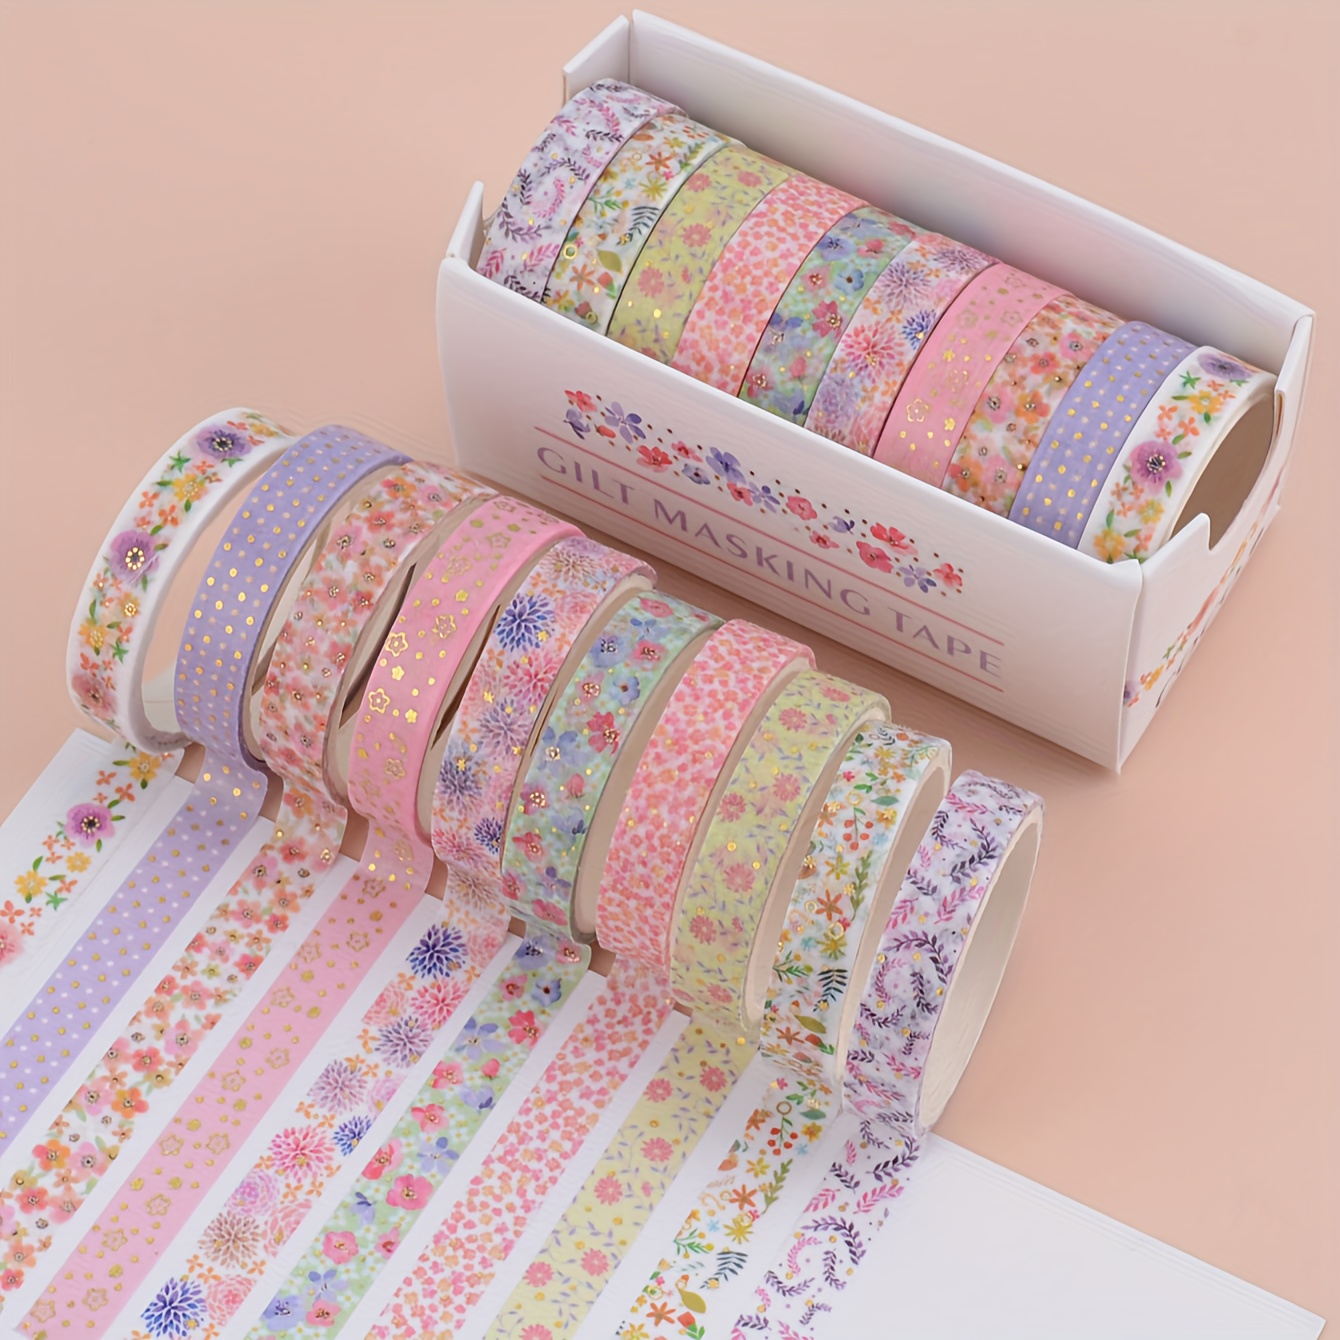  Kawaii Washi Tape Set, Cute Cartoon Print Wide Washi Masking  Tape Sticker Decorative Label for Scrapbook, DIY Crafts, Bullet Journal  Supplies, School Stationary for Back to School